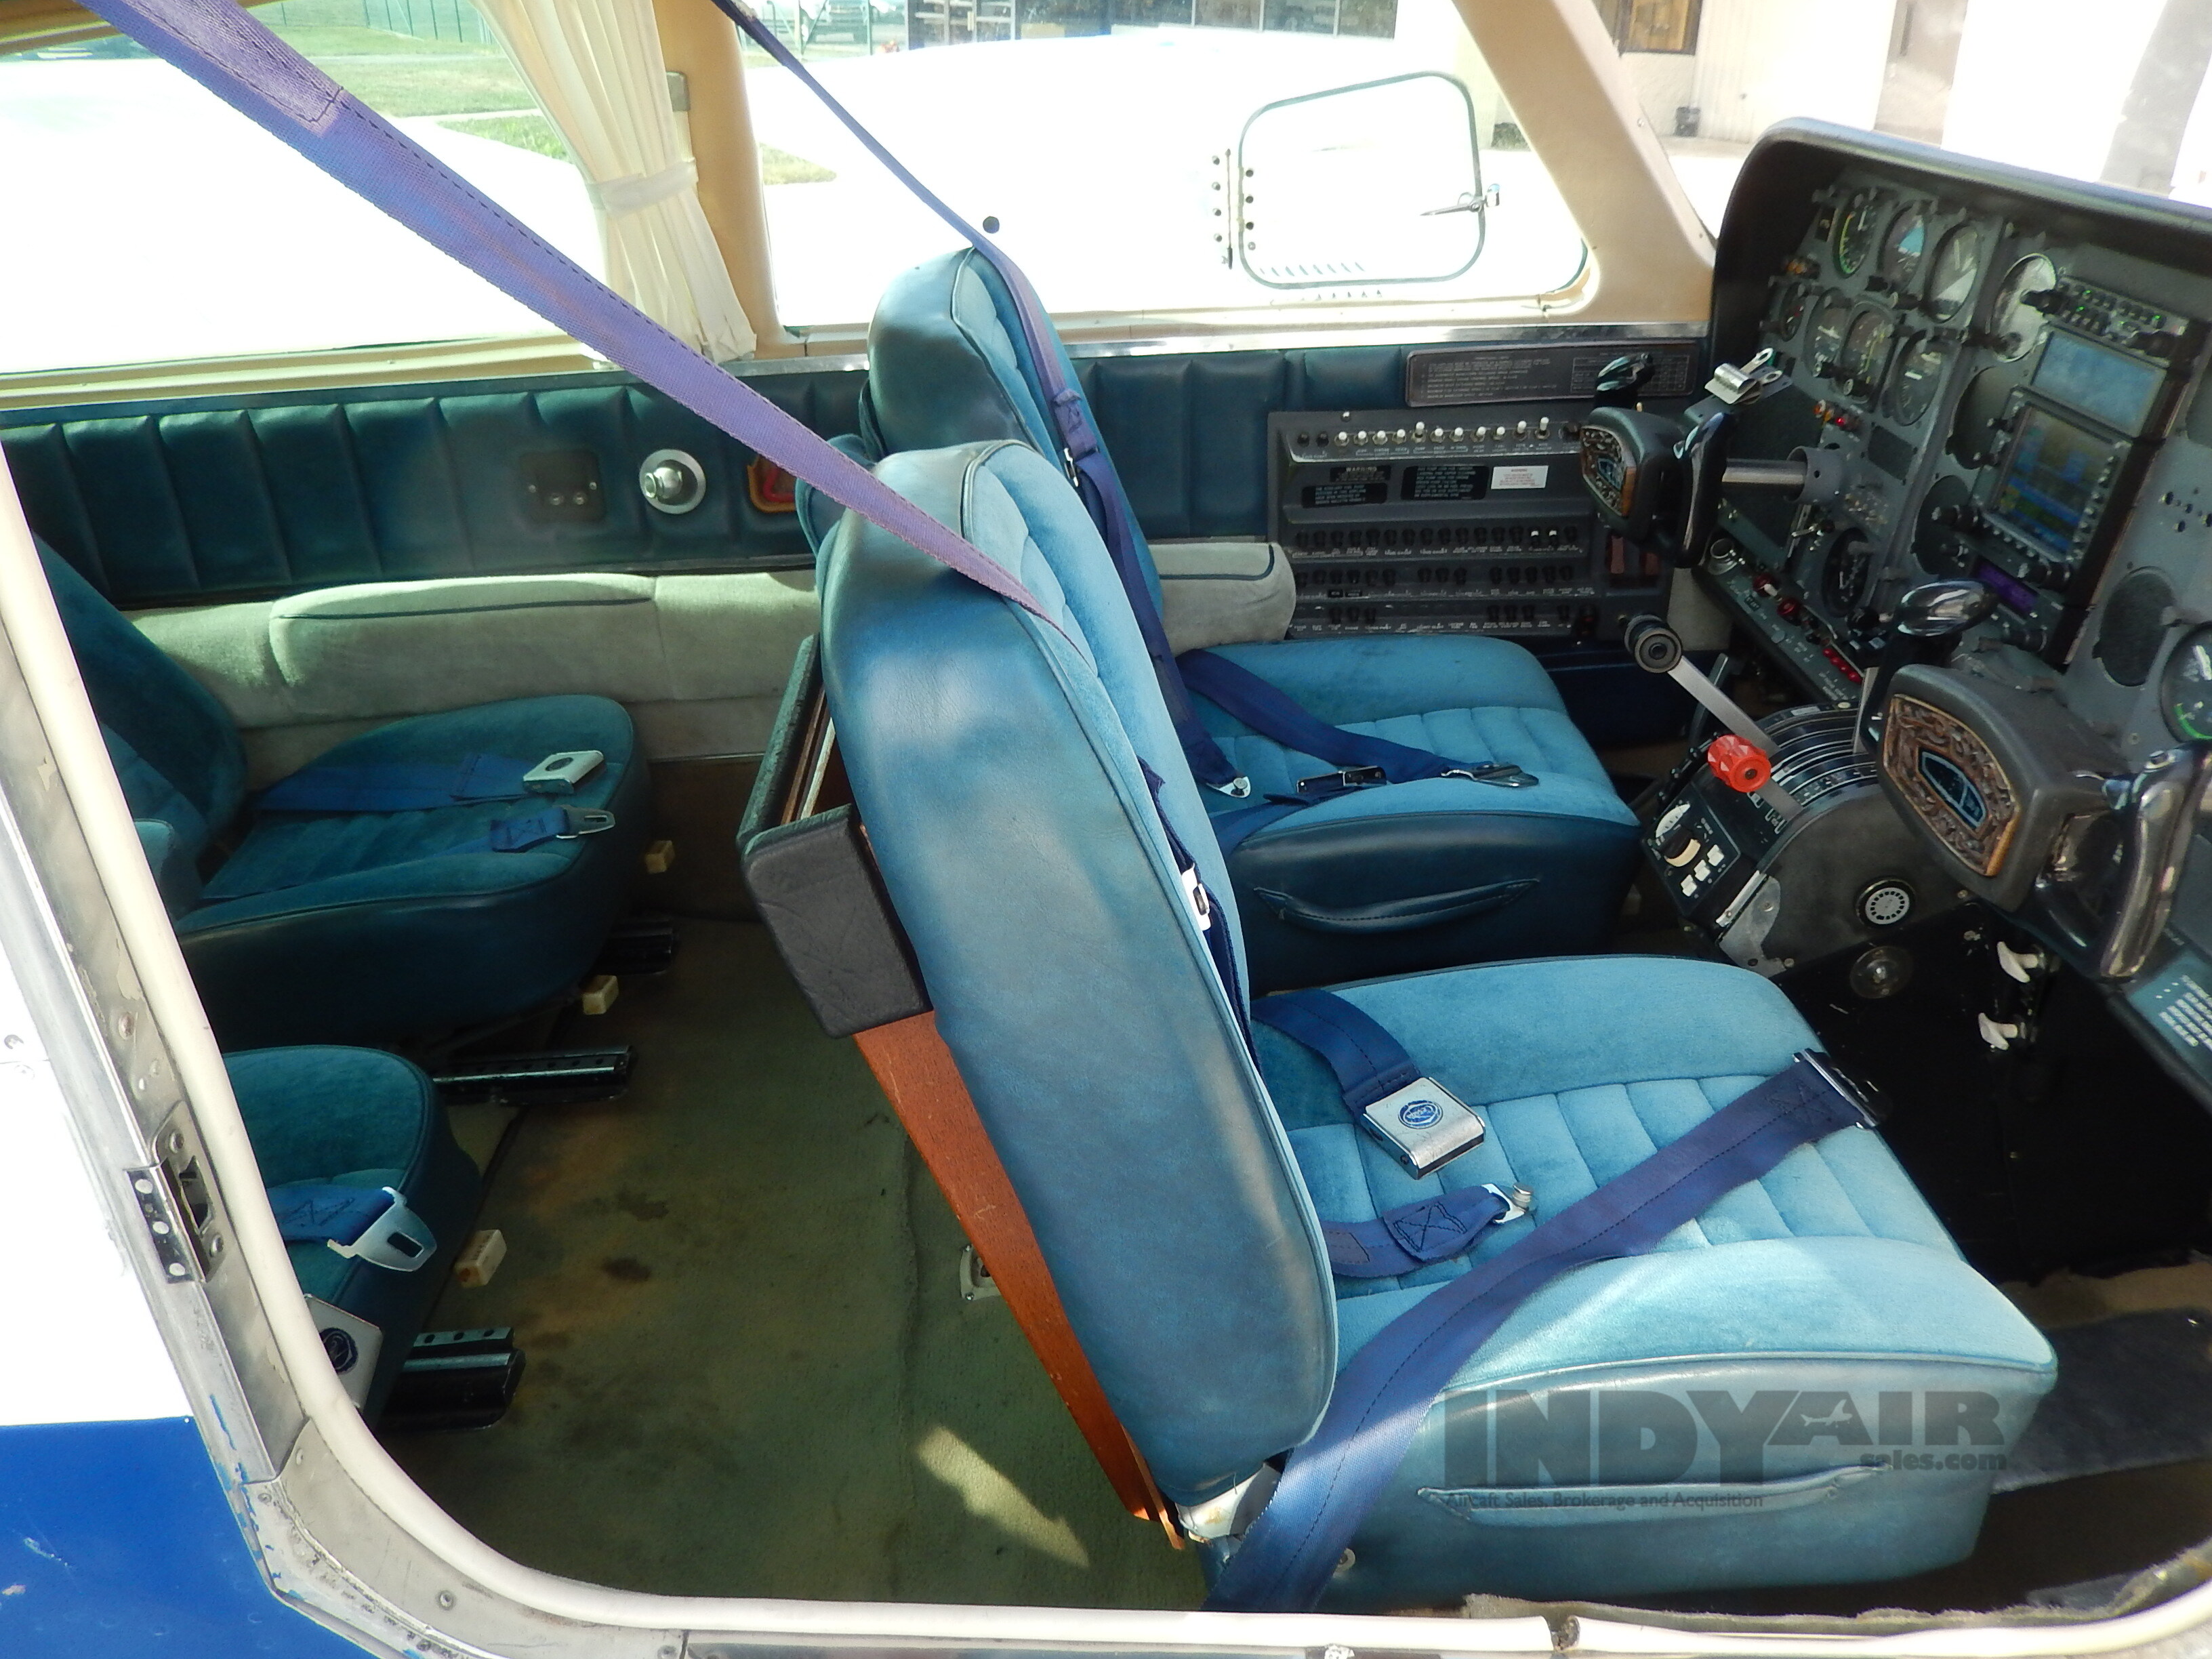 1975 Cessna 310R - N77FA